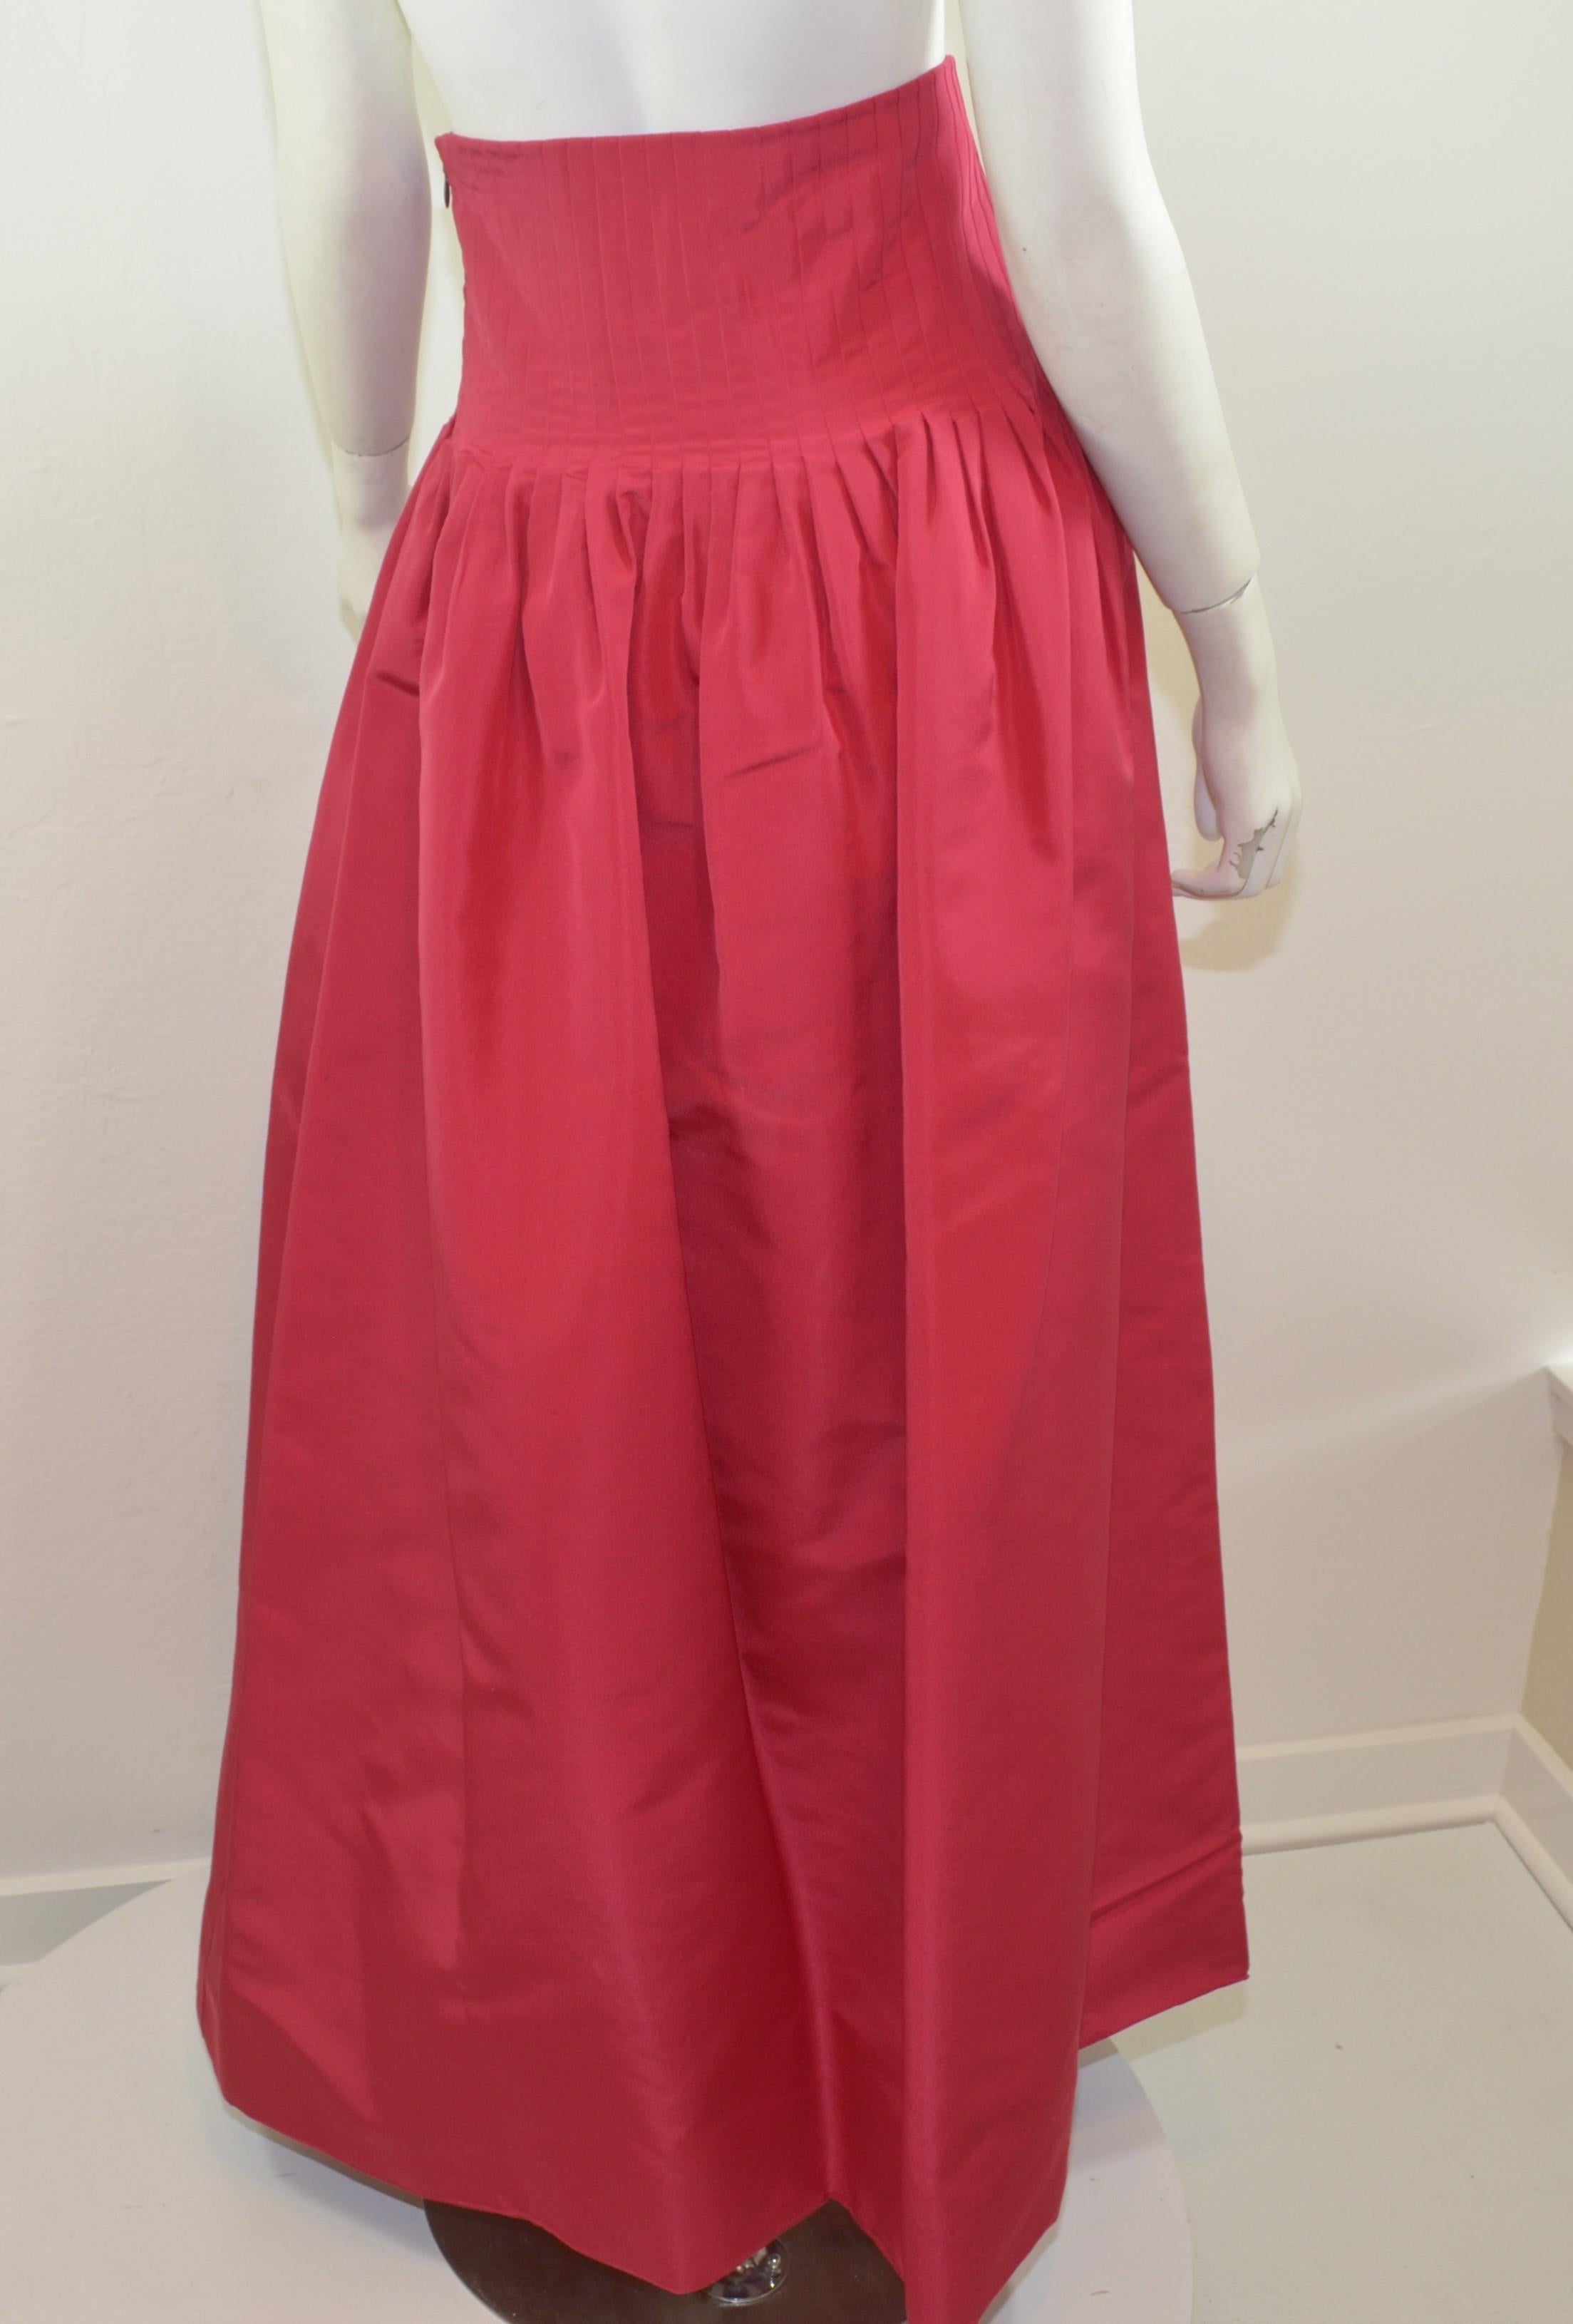 Women's Pierre Cardin Vintage Skirt and Blouse Ensemble For Sale